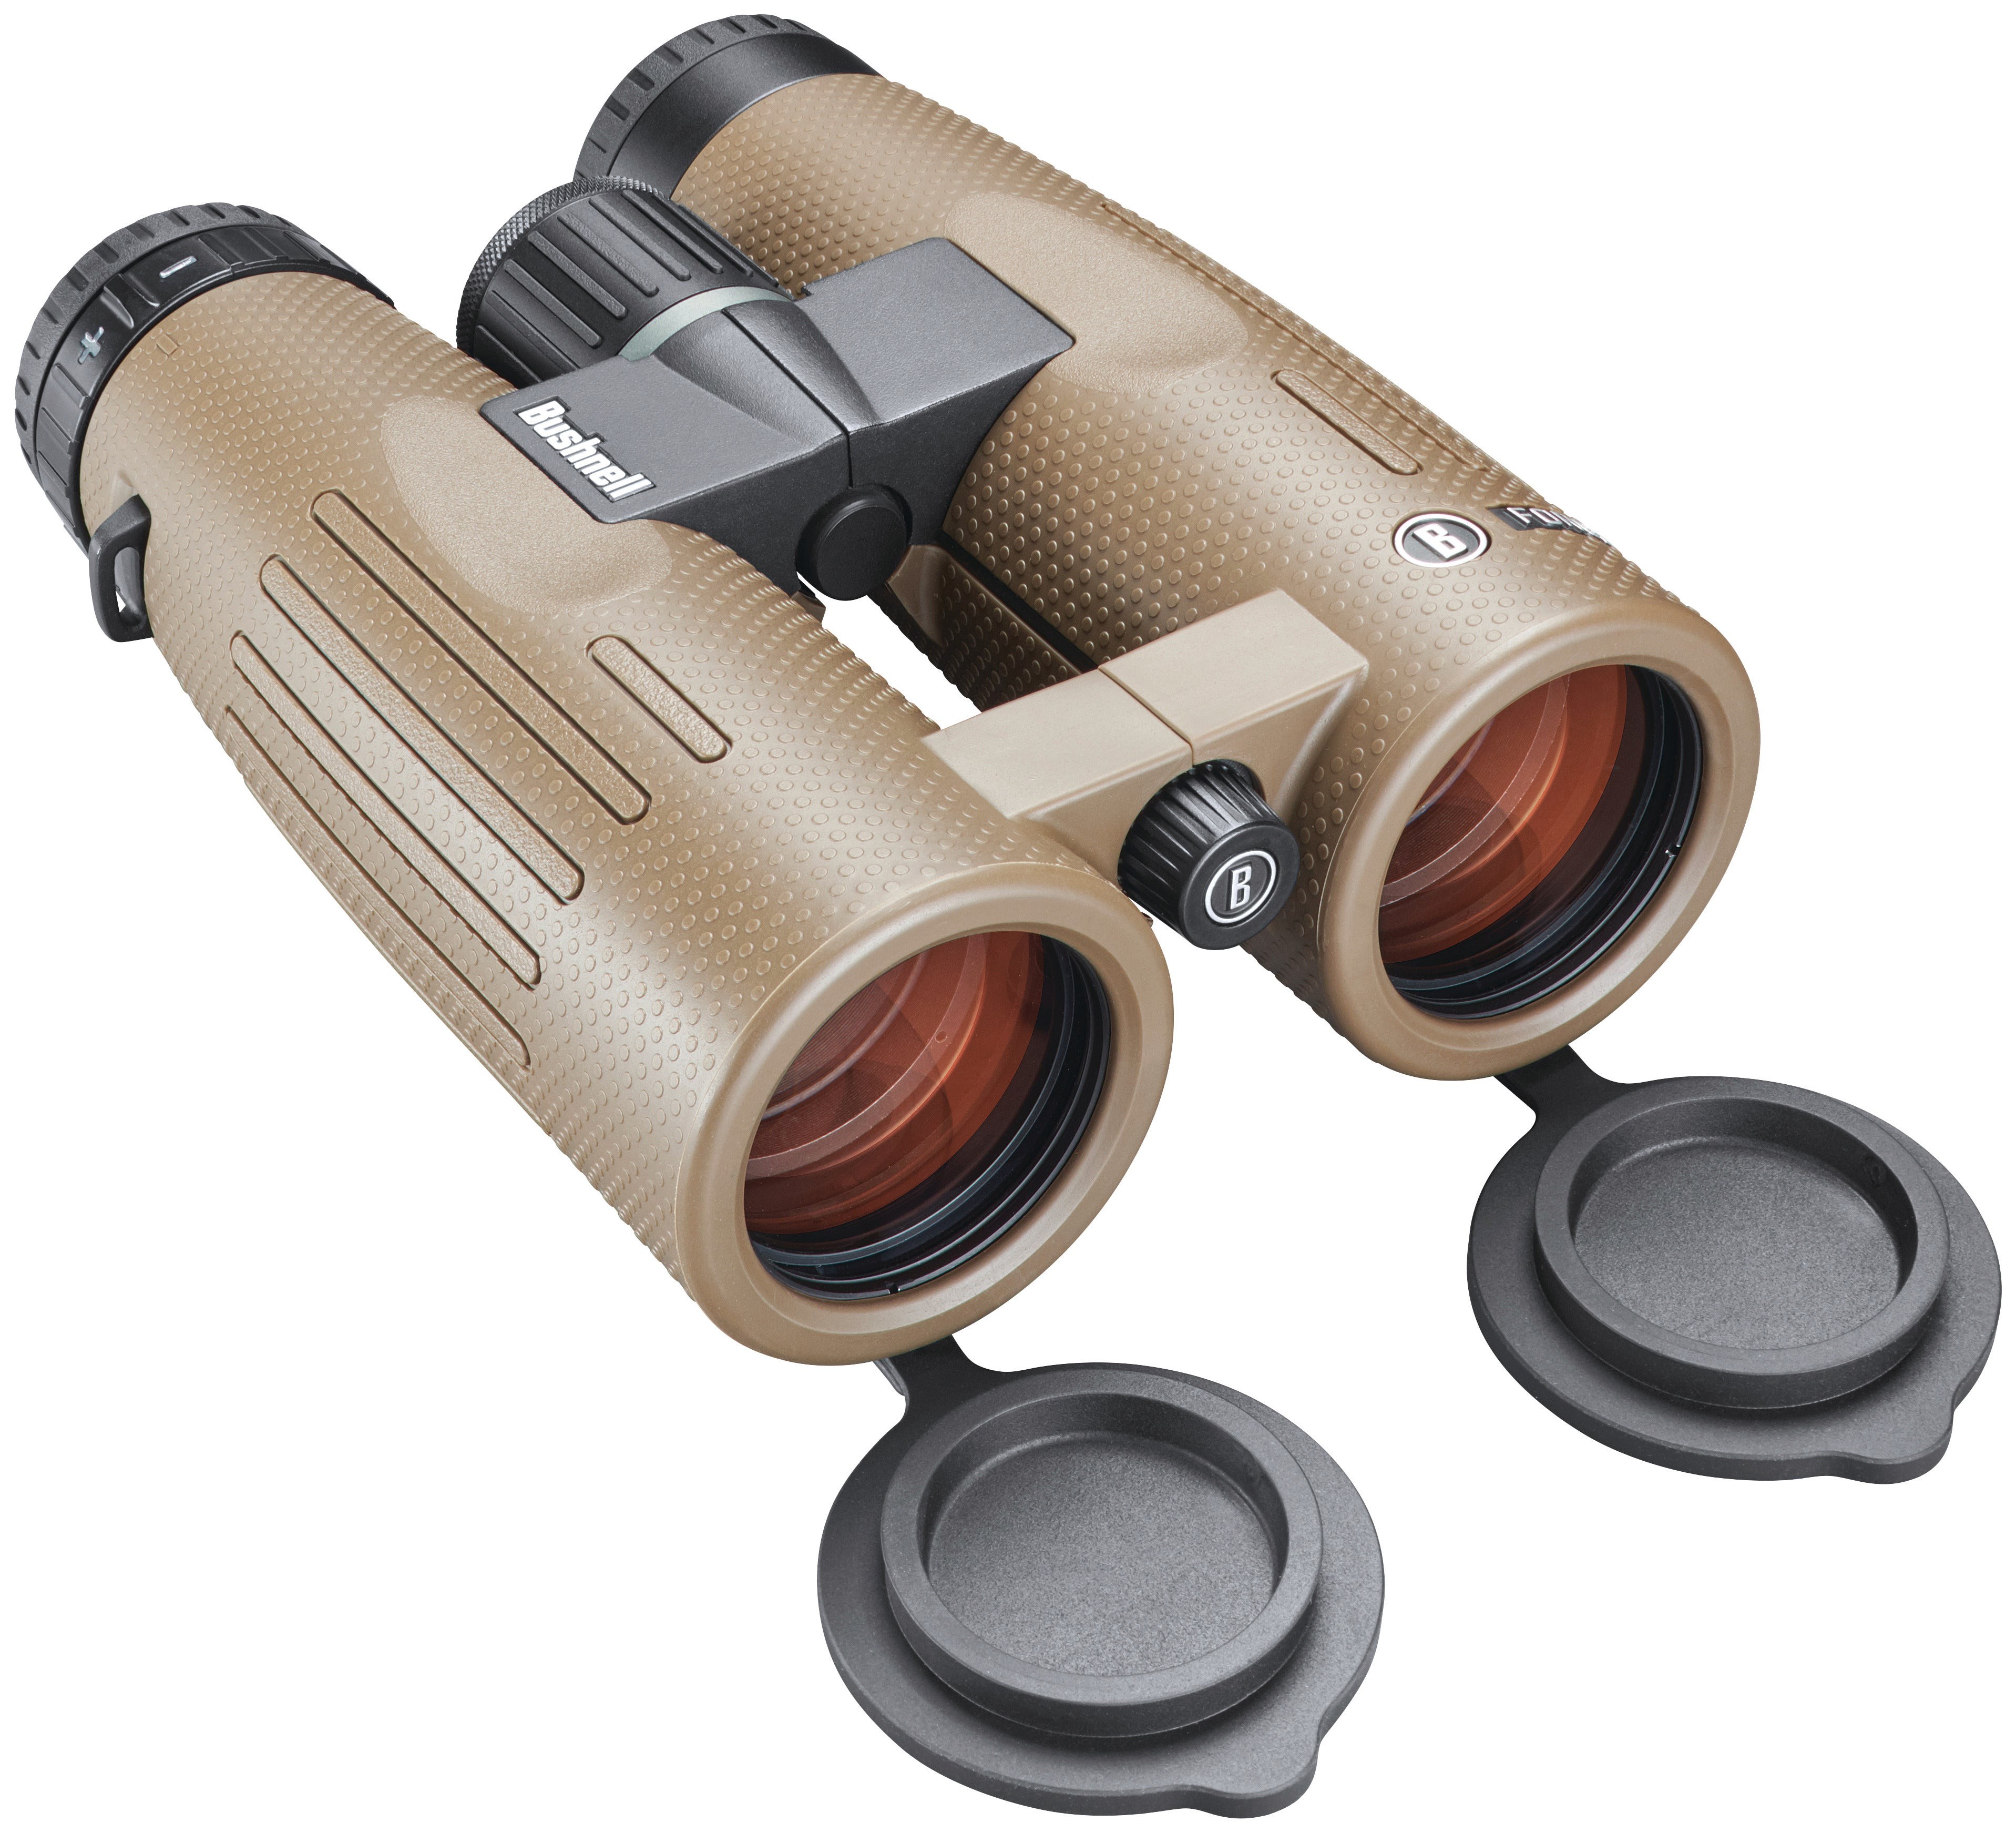 Forge 10x42mm Roof Prism Binoculars